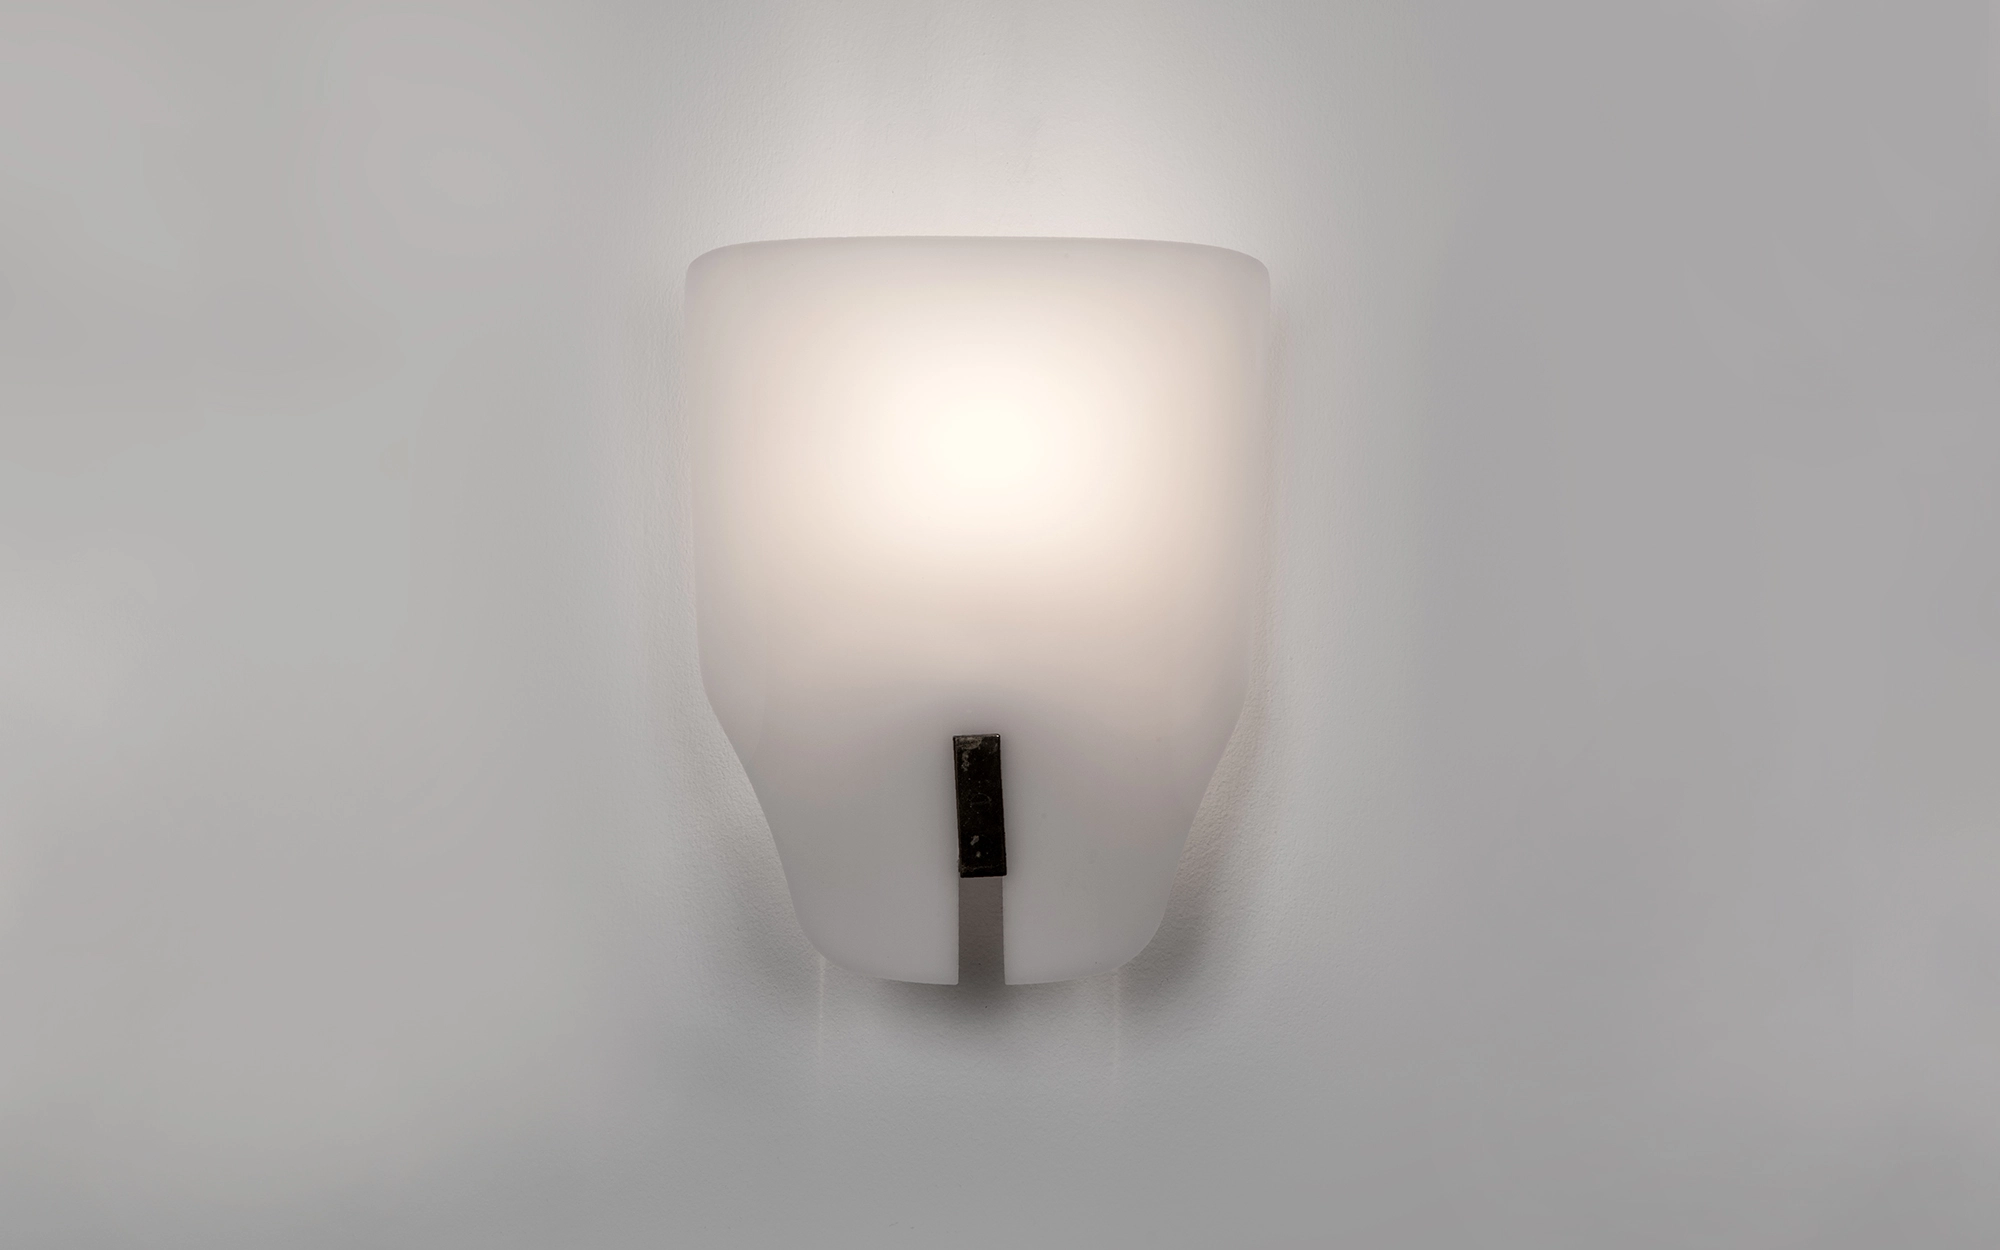 167px - Gino Sarfatti - Floor light - Galerie kreo